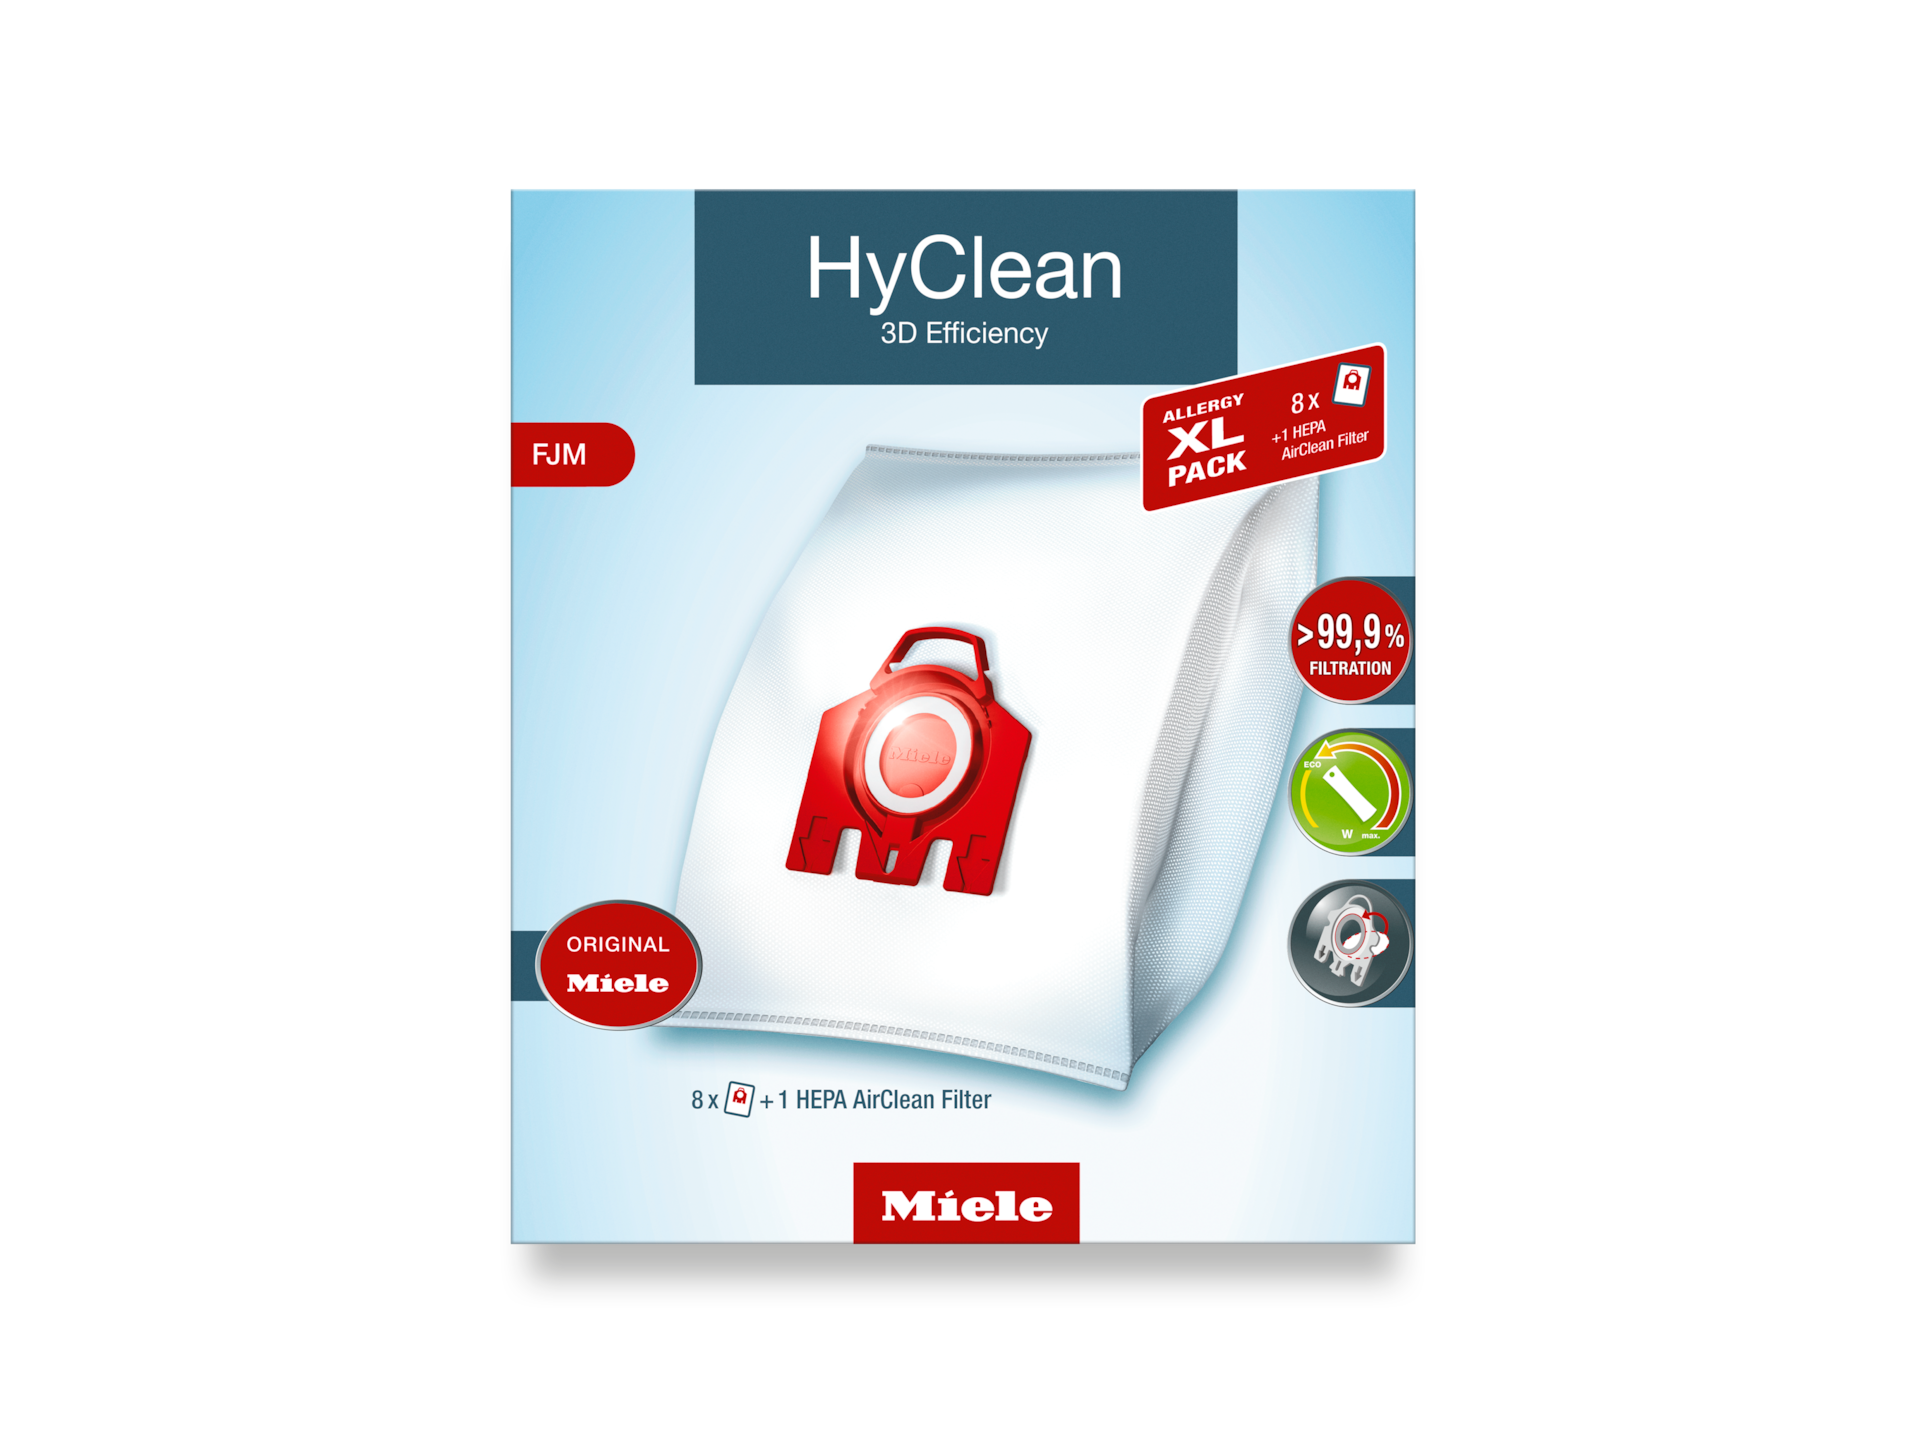 Lisätarvikkeet - FJM Allergy XL HyClean 3D - 1